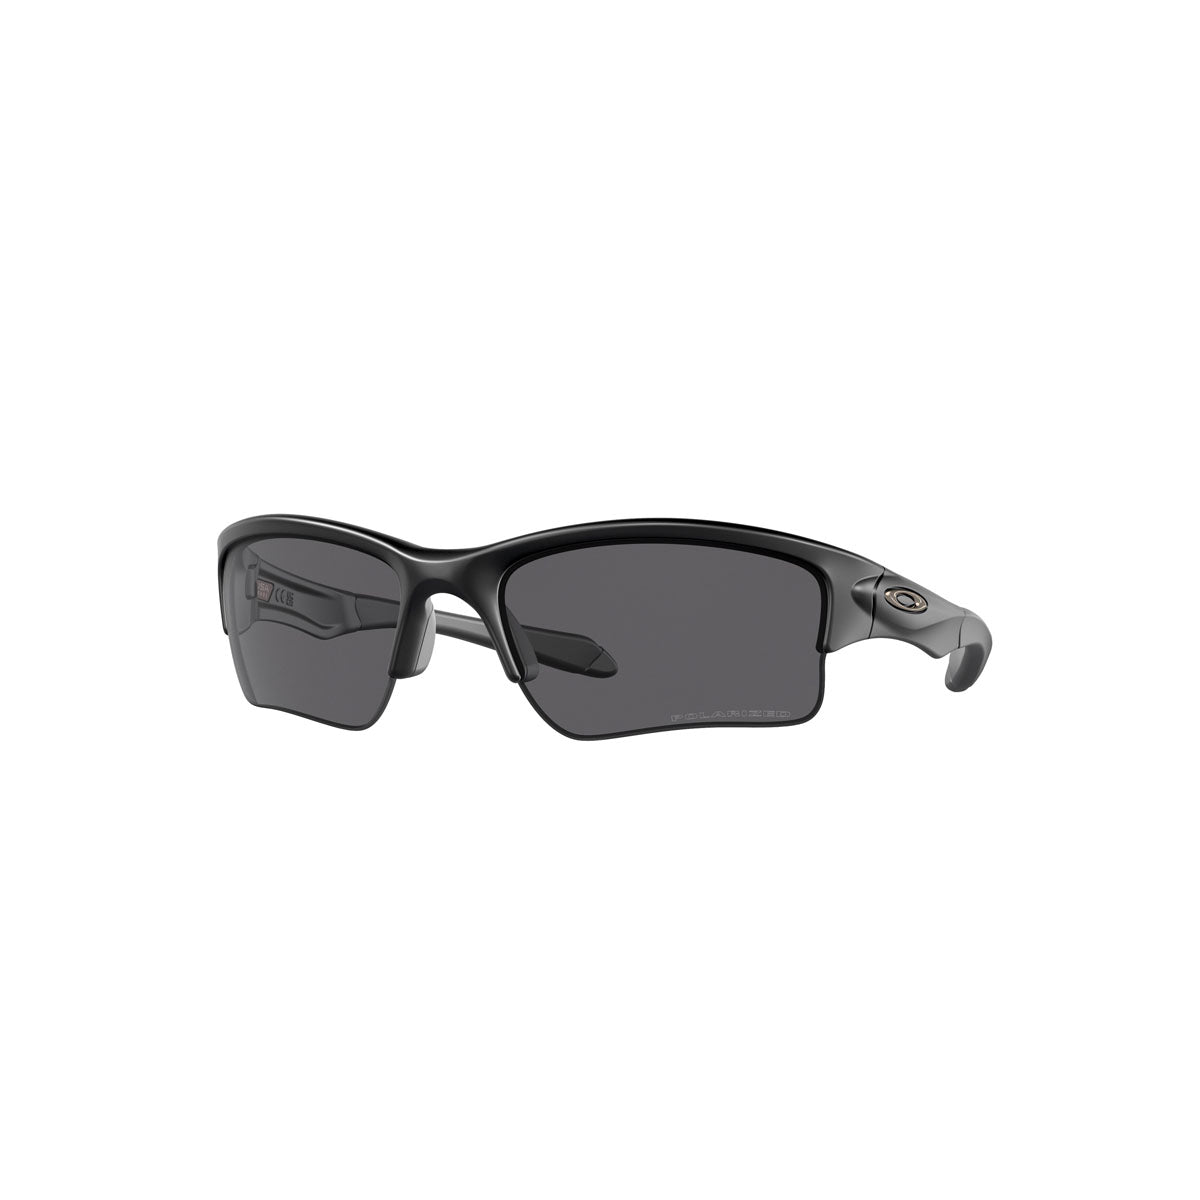 Oakley Quarter Jacket Polarized Sunglasses - Matte Black/Grey Polarized